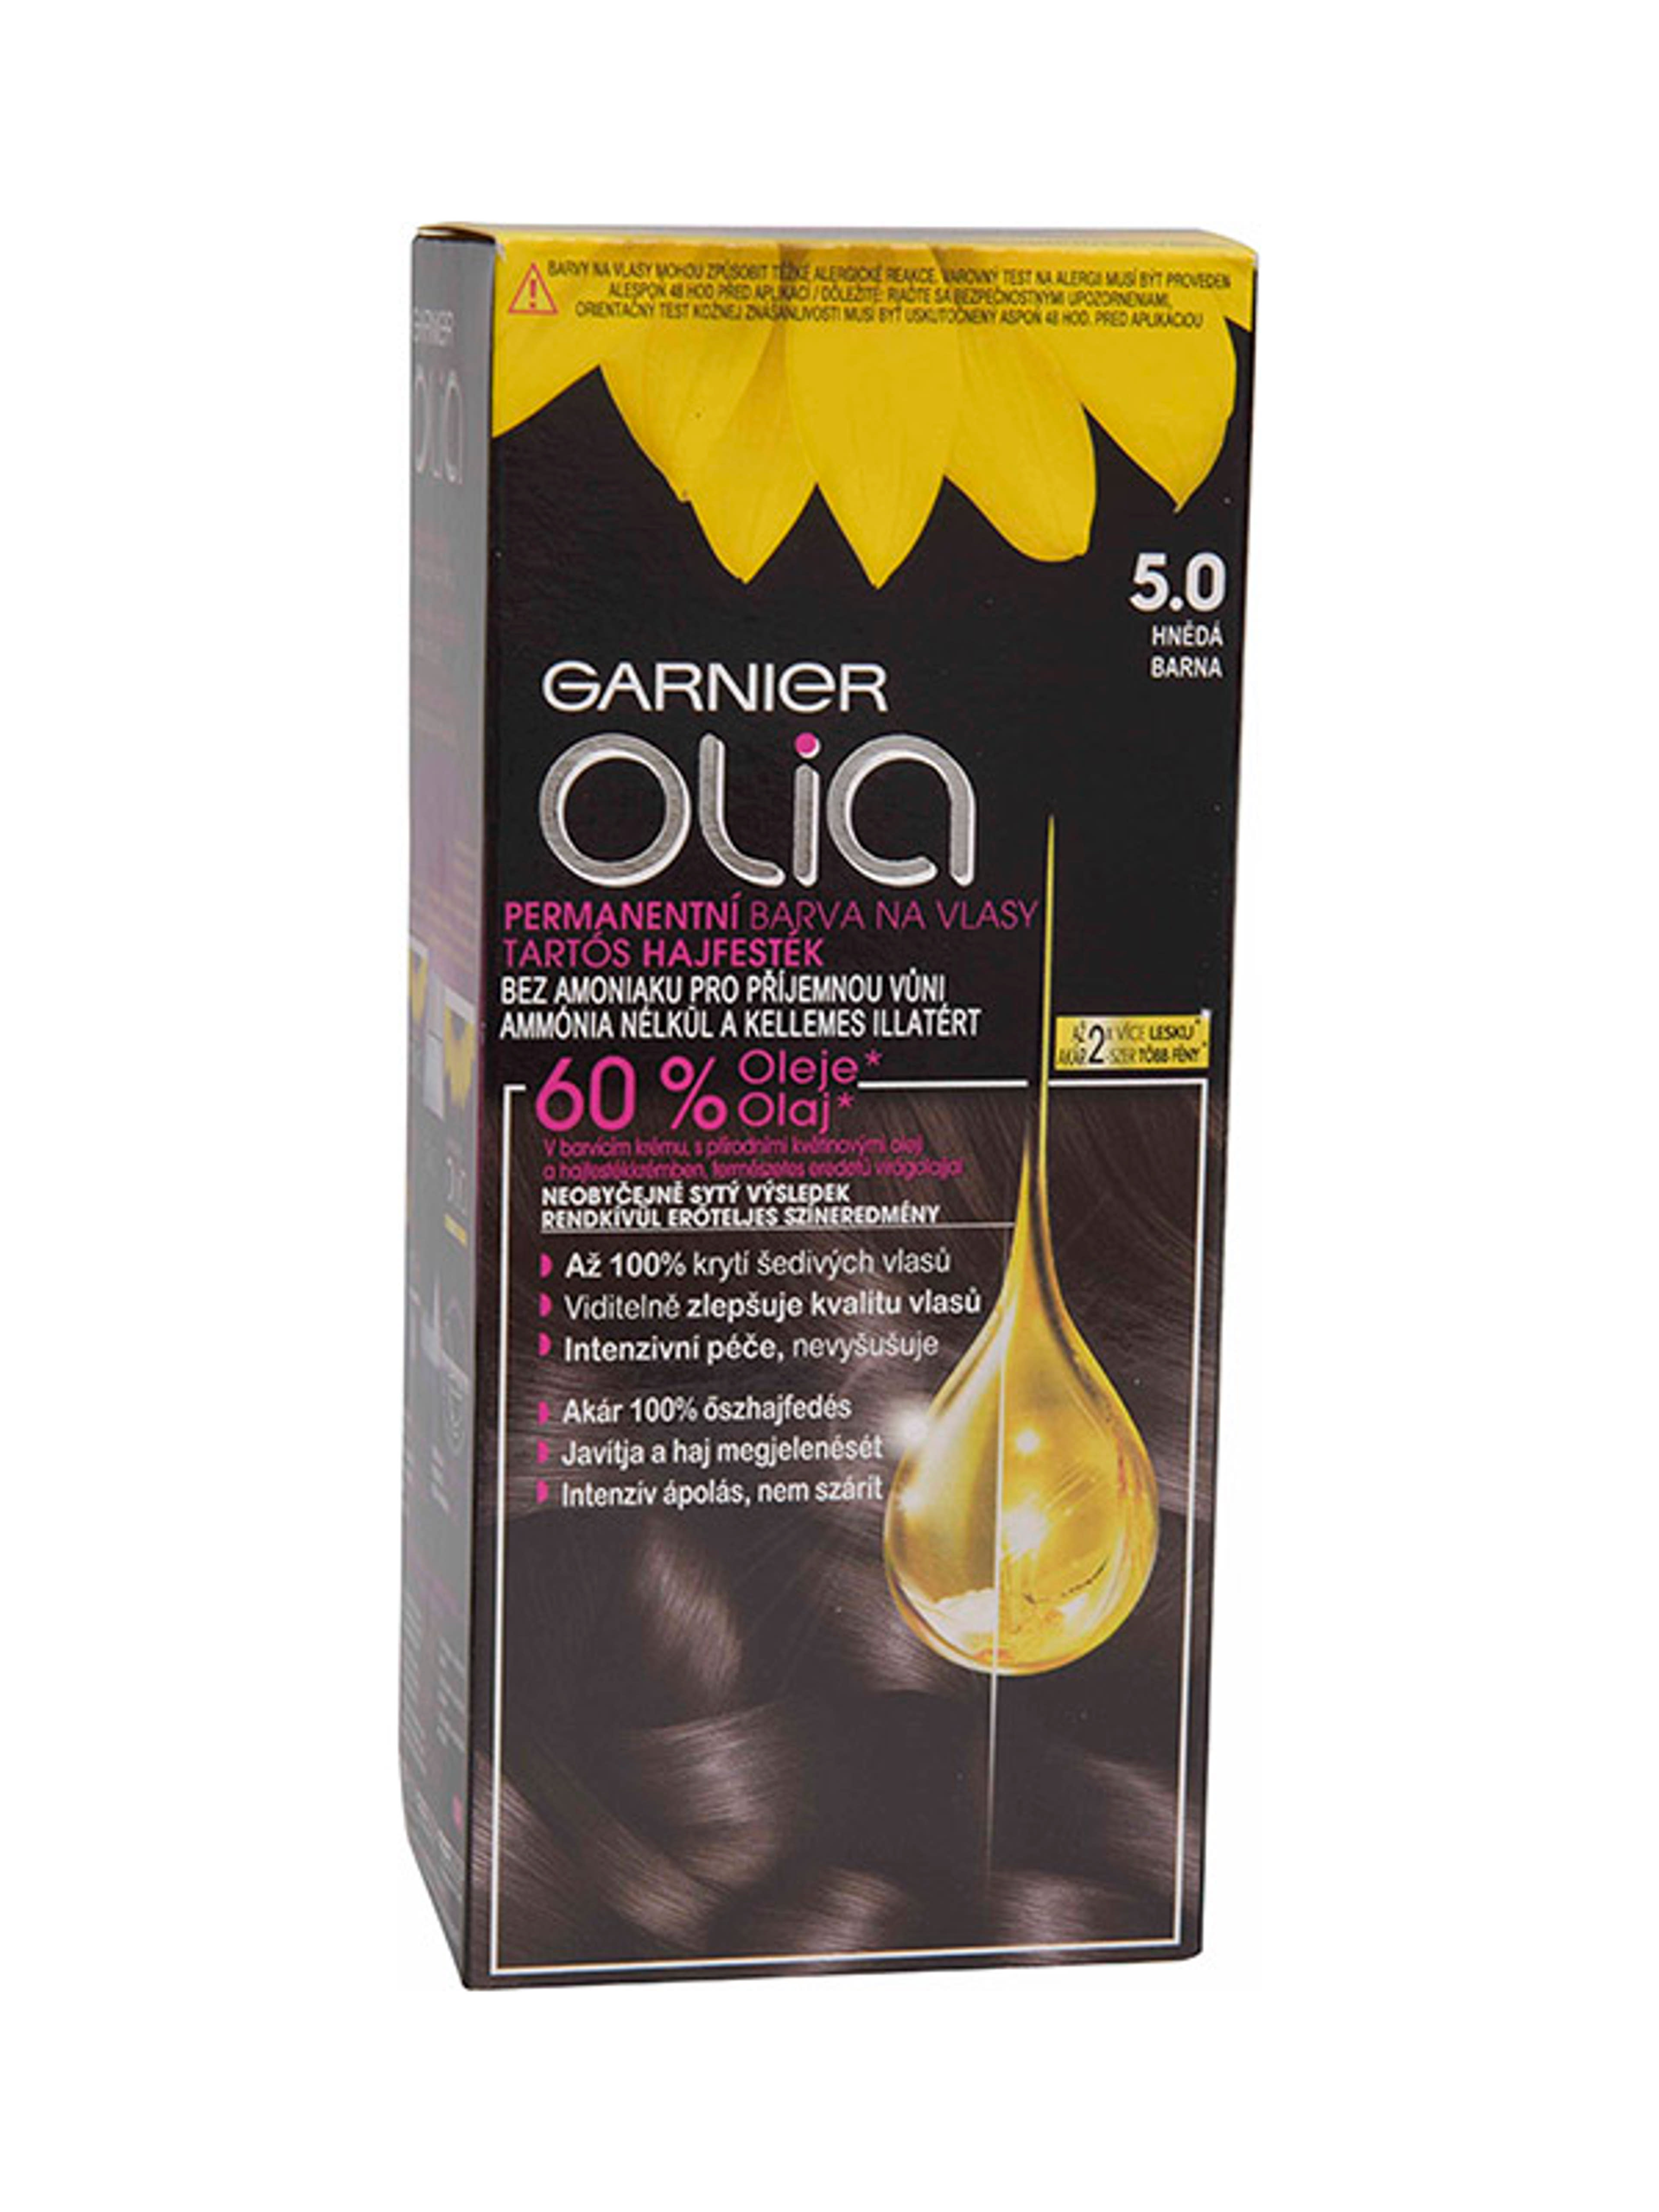 Garnier Olia tartós hajfesték 5.0 Barna - 1 db